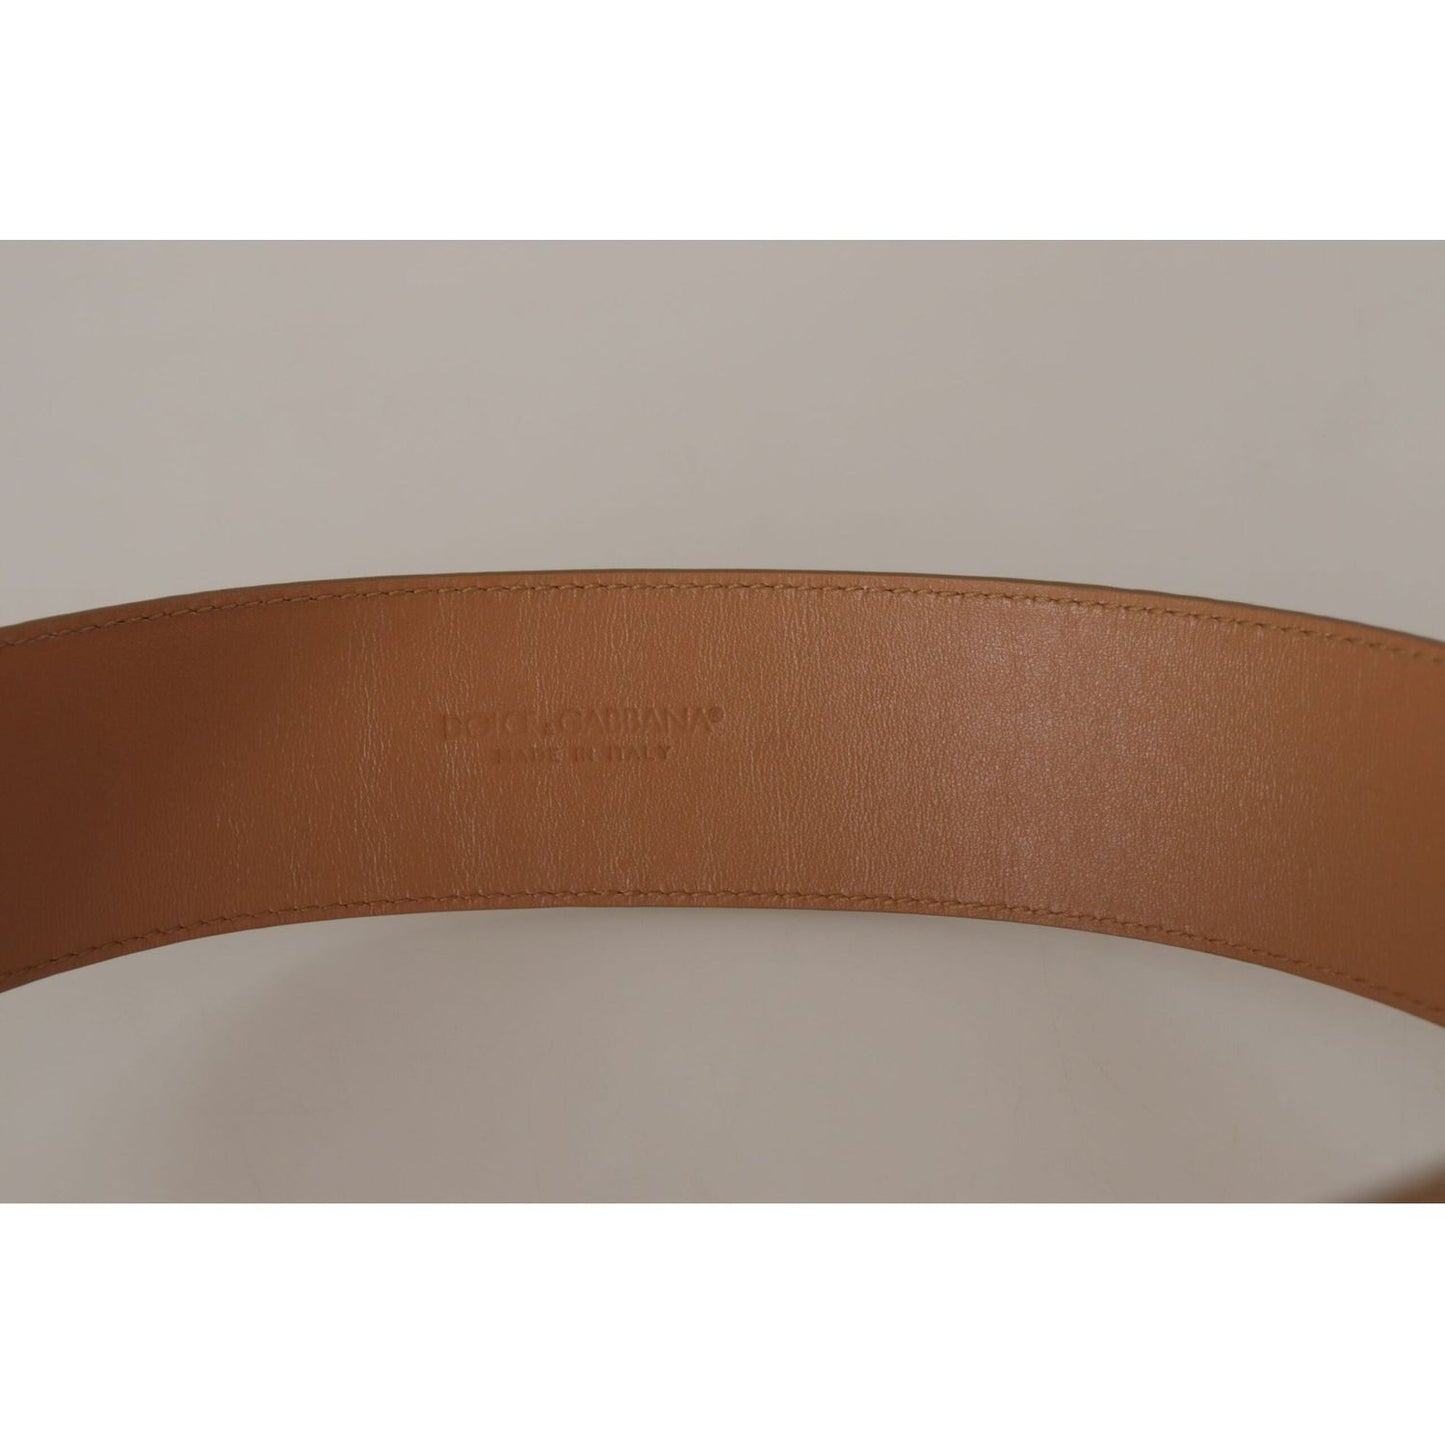 Dolce & Gabbana Elegant Beige Leather Belt with Engraved Buckle brown-beige-leather-gold-metal-oval-buckle-belt IMG_9776-1-scaled-bff5eef6-3fe.jpg